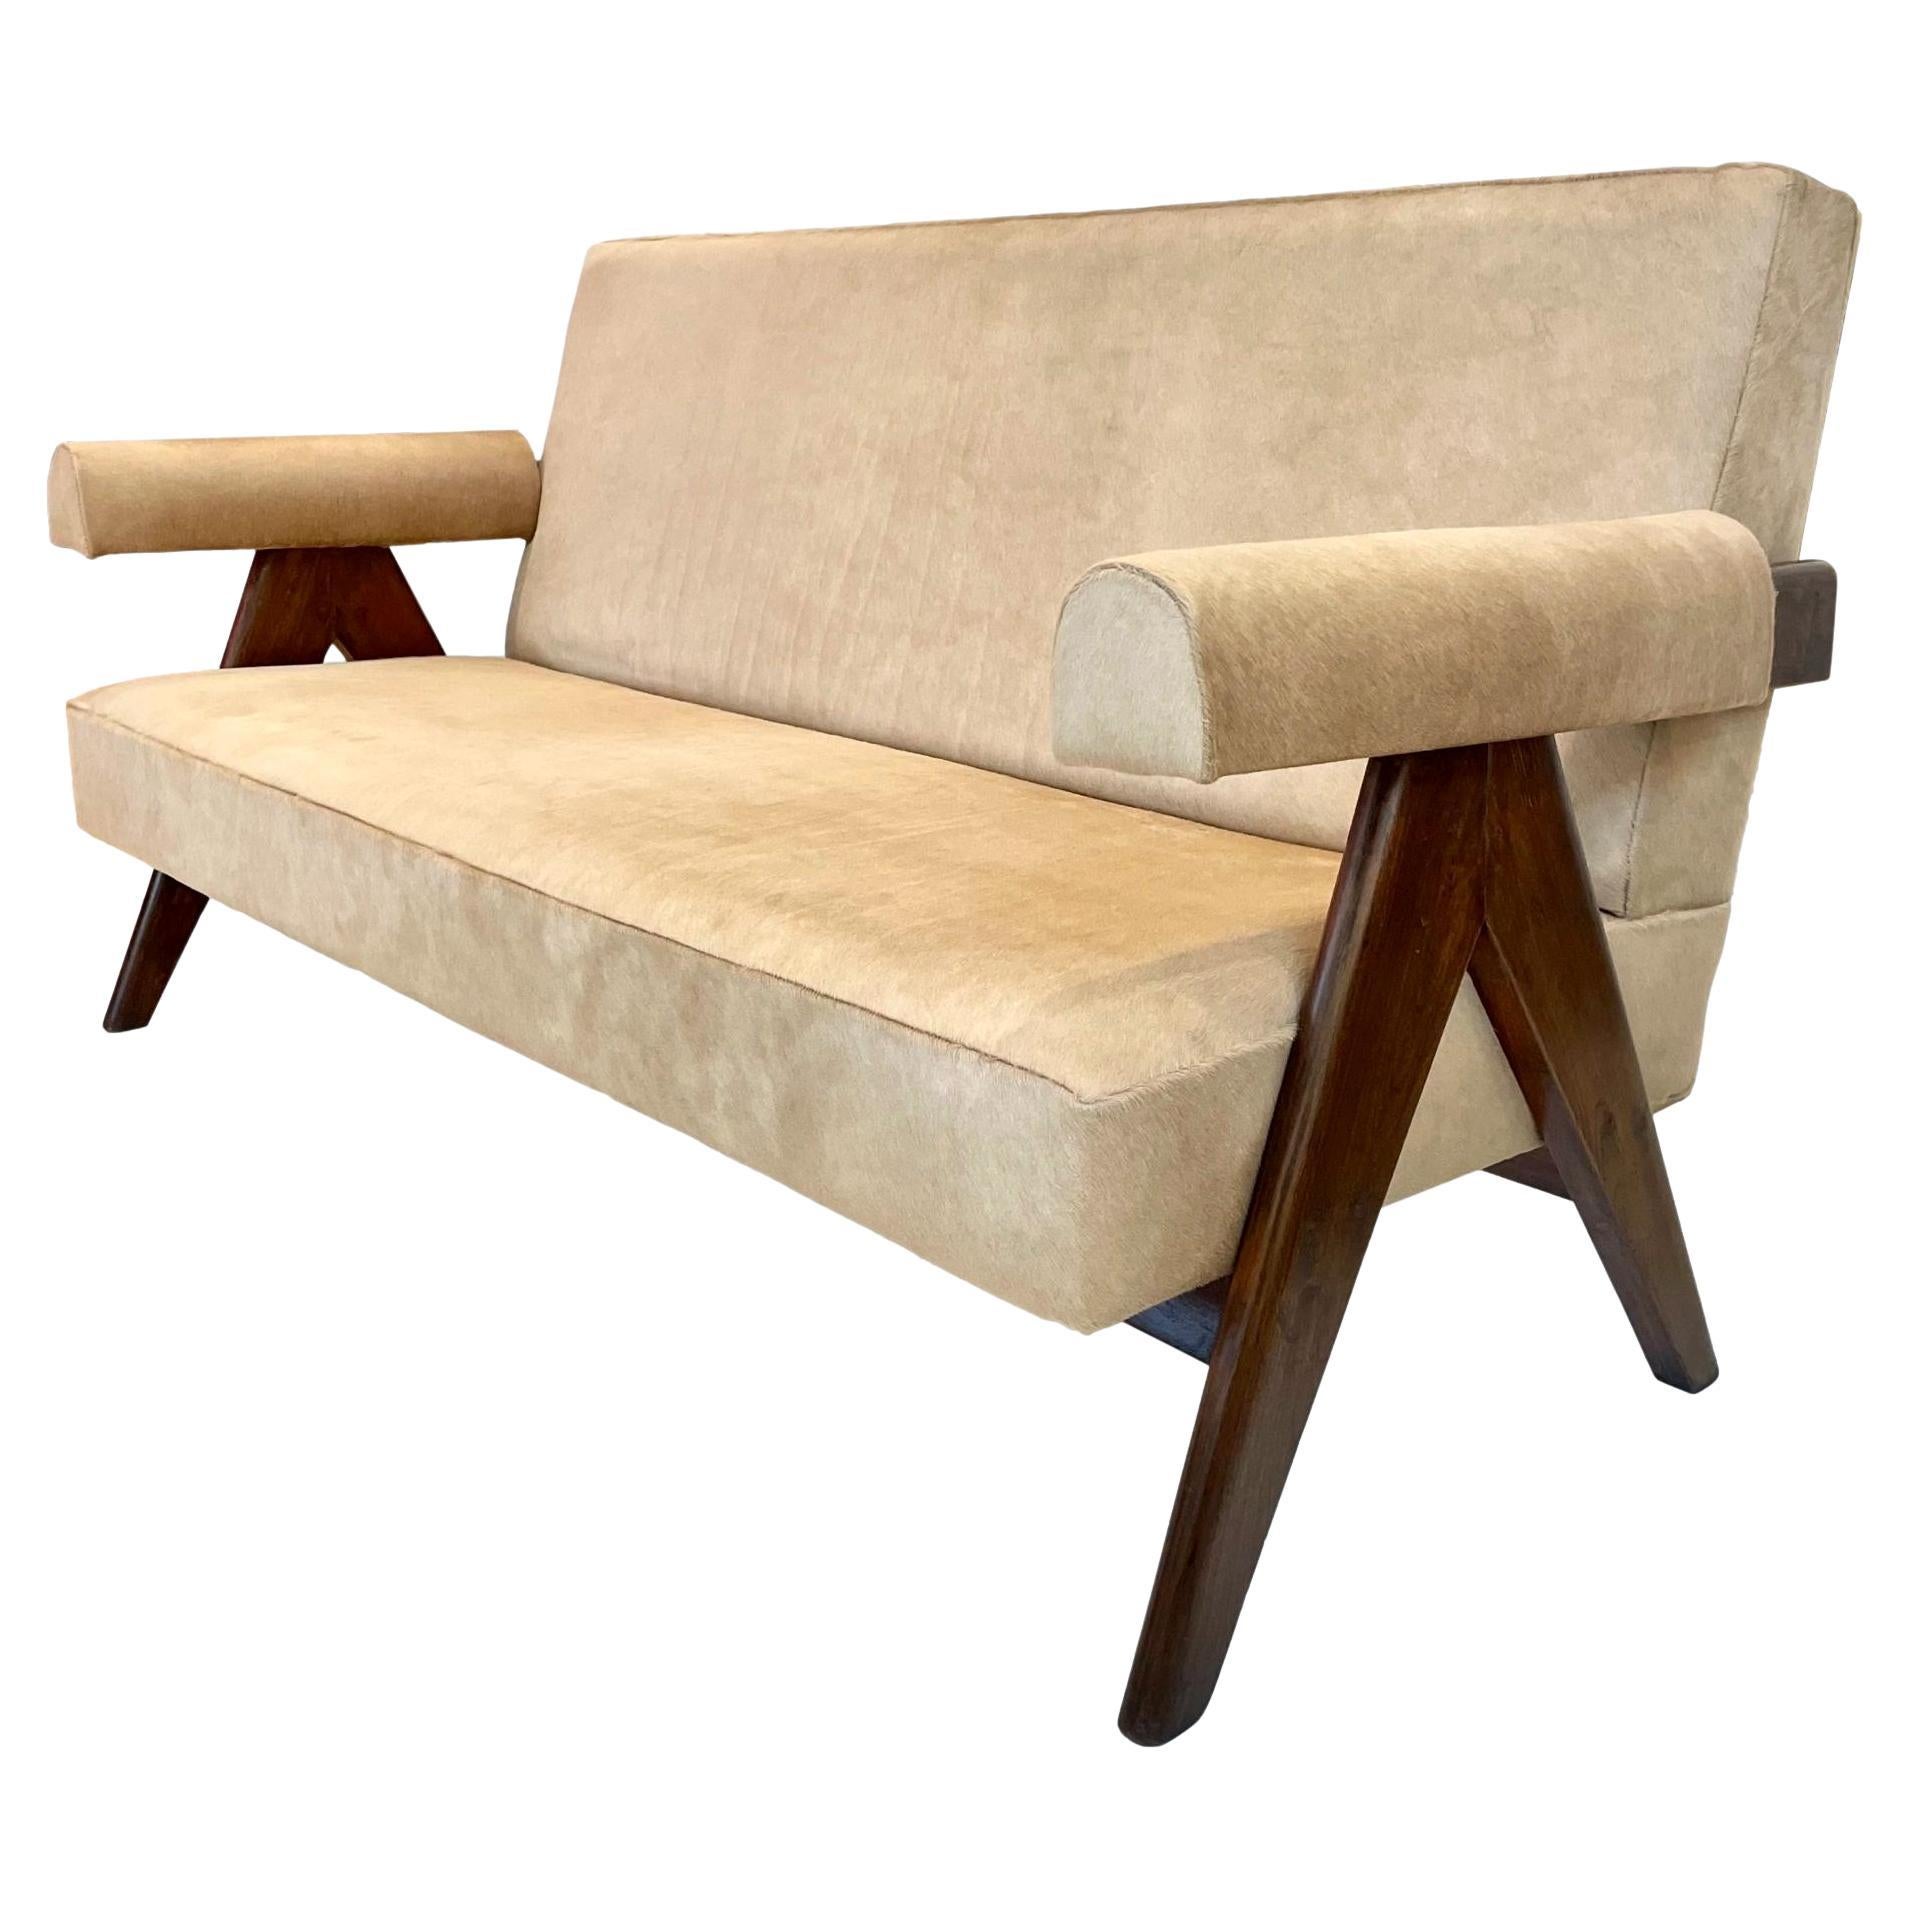 Pierre Jeanneret X-Bein-Sofa aus Rindsleder in Rindsleder, Chandigargh, 1950er Jahre im Angebot